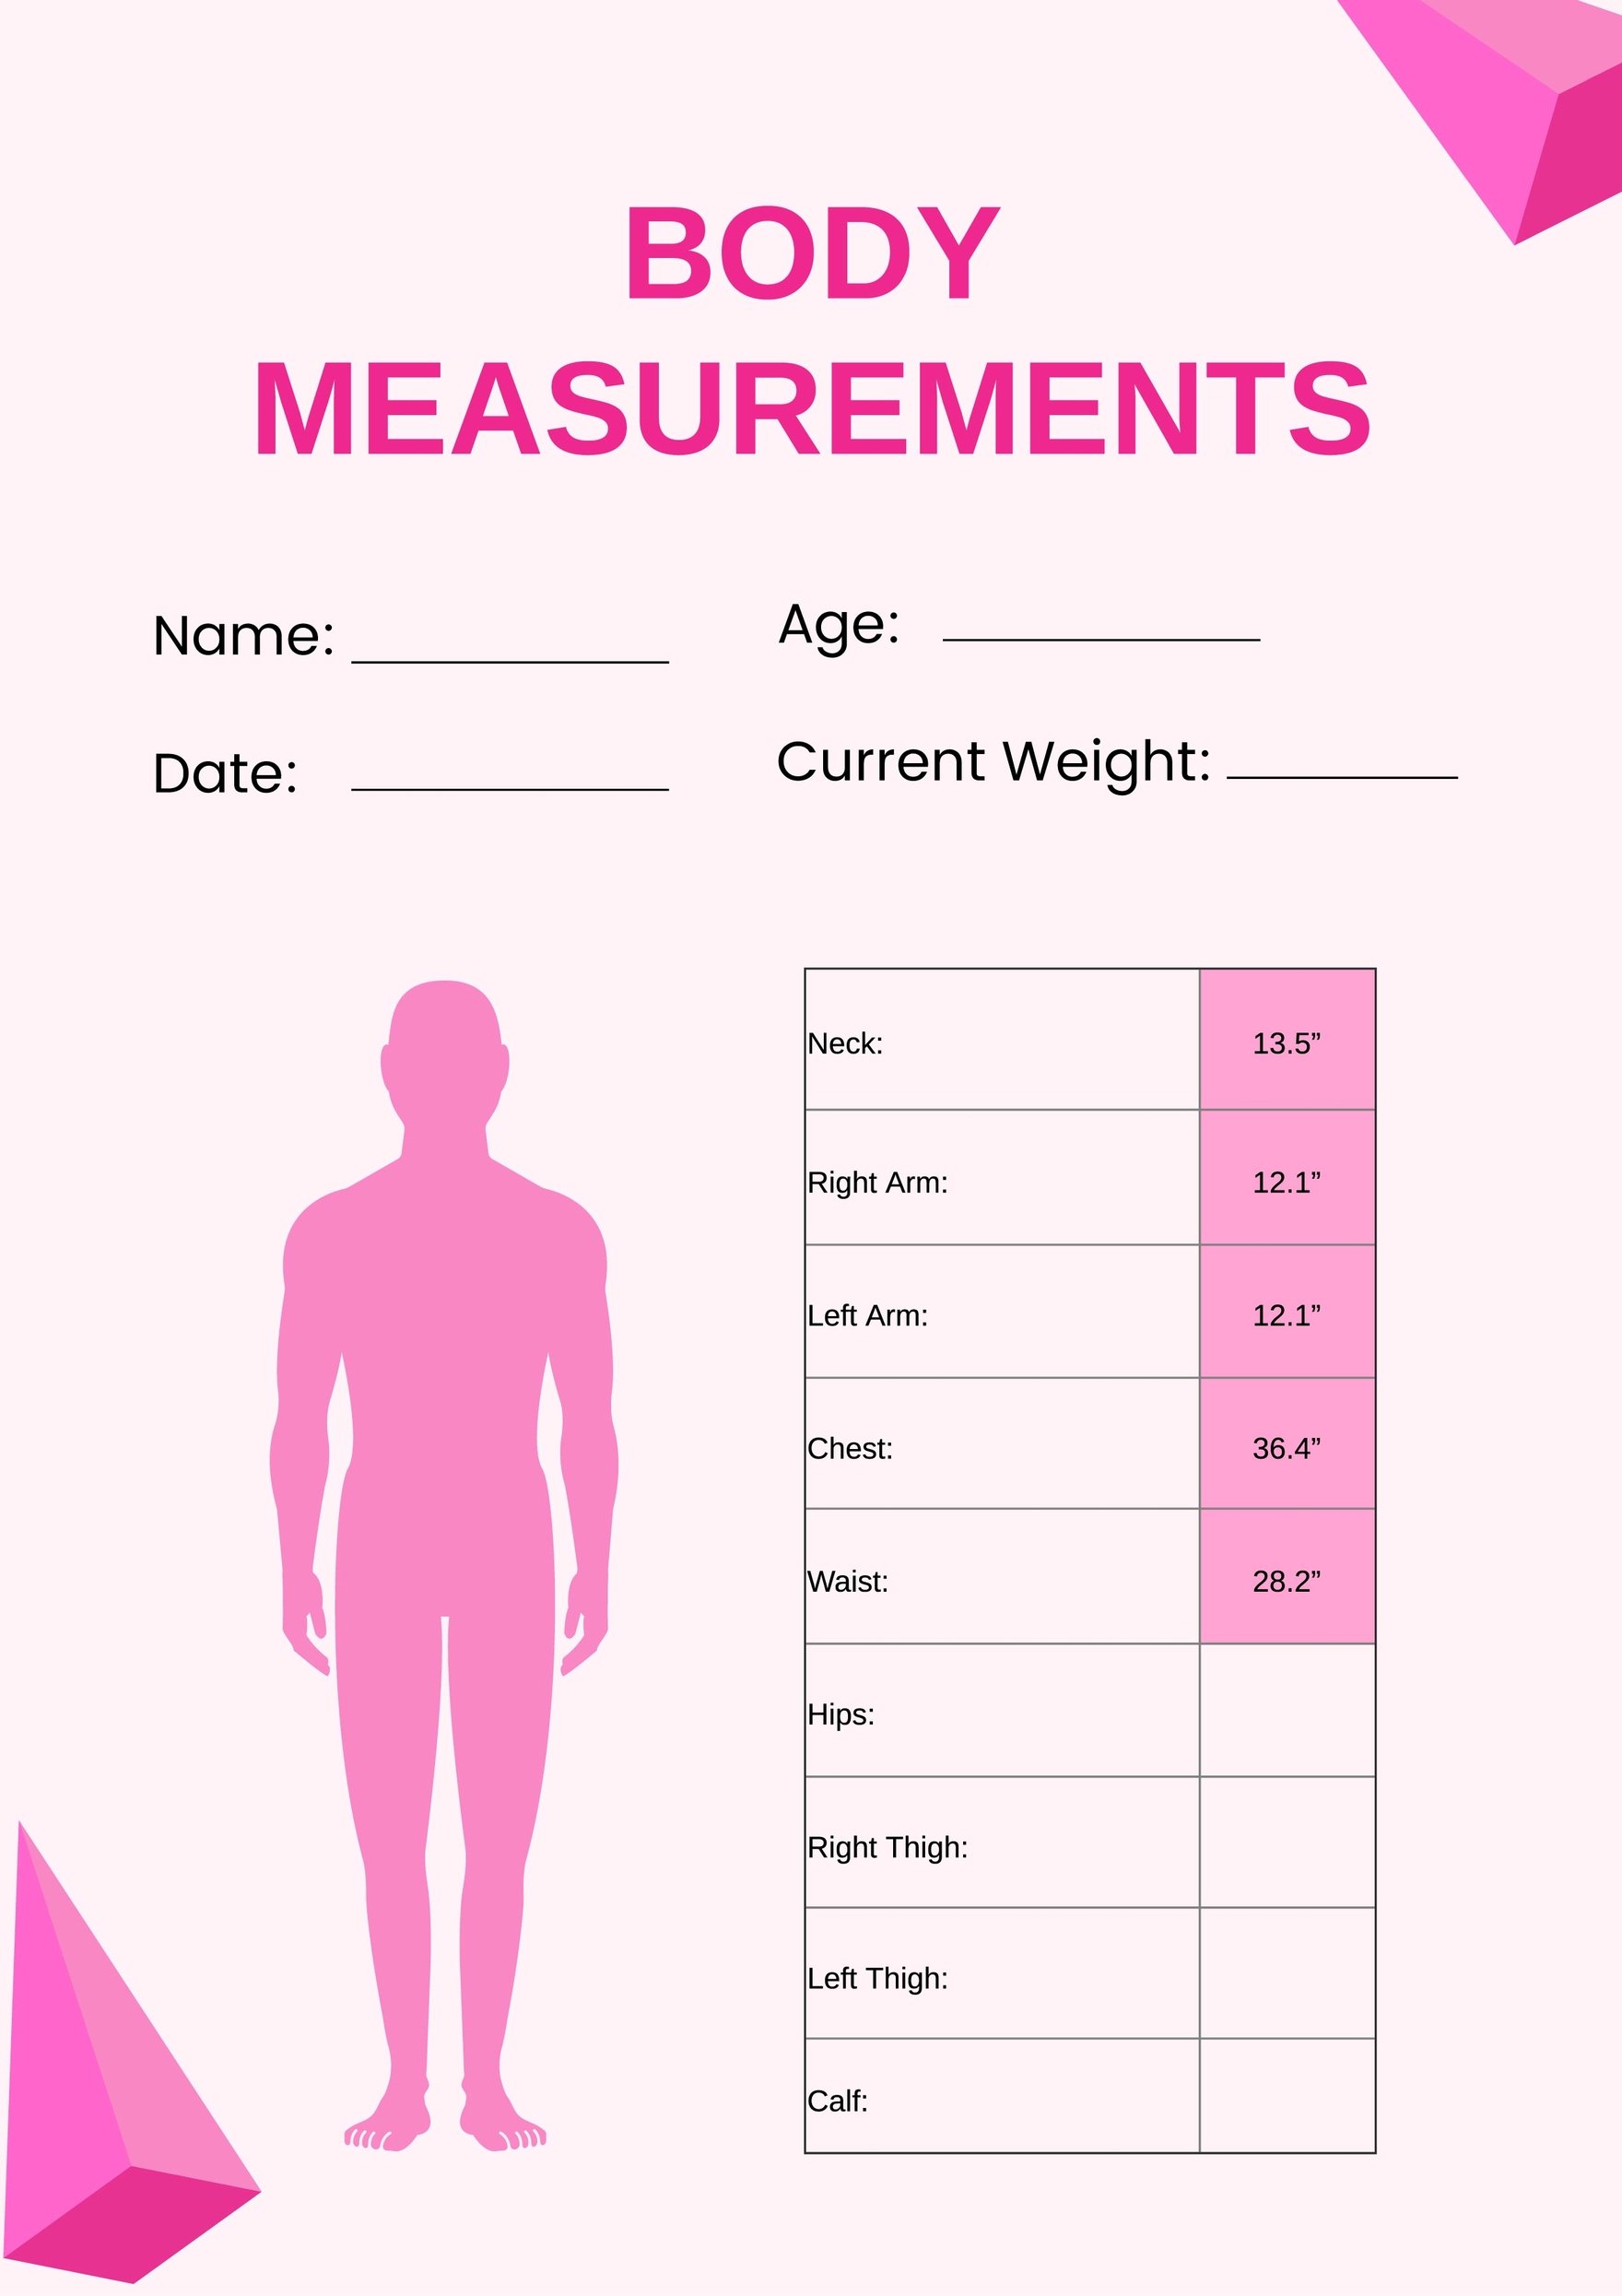 Body Length Measurement Chart